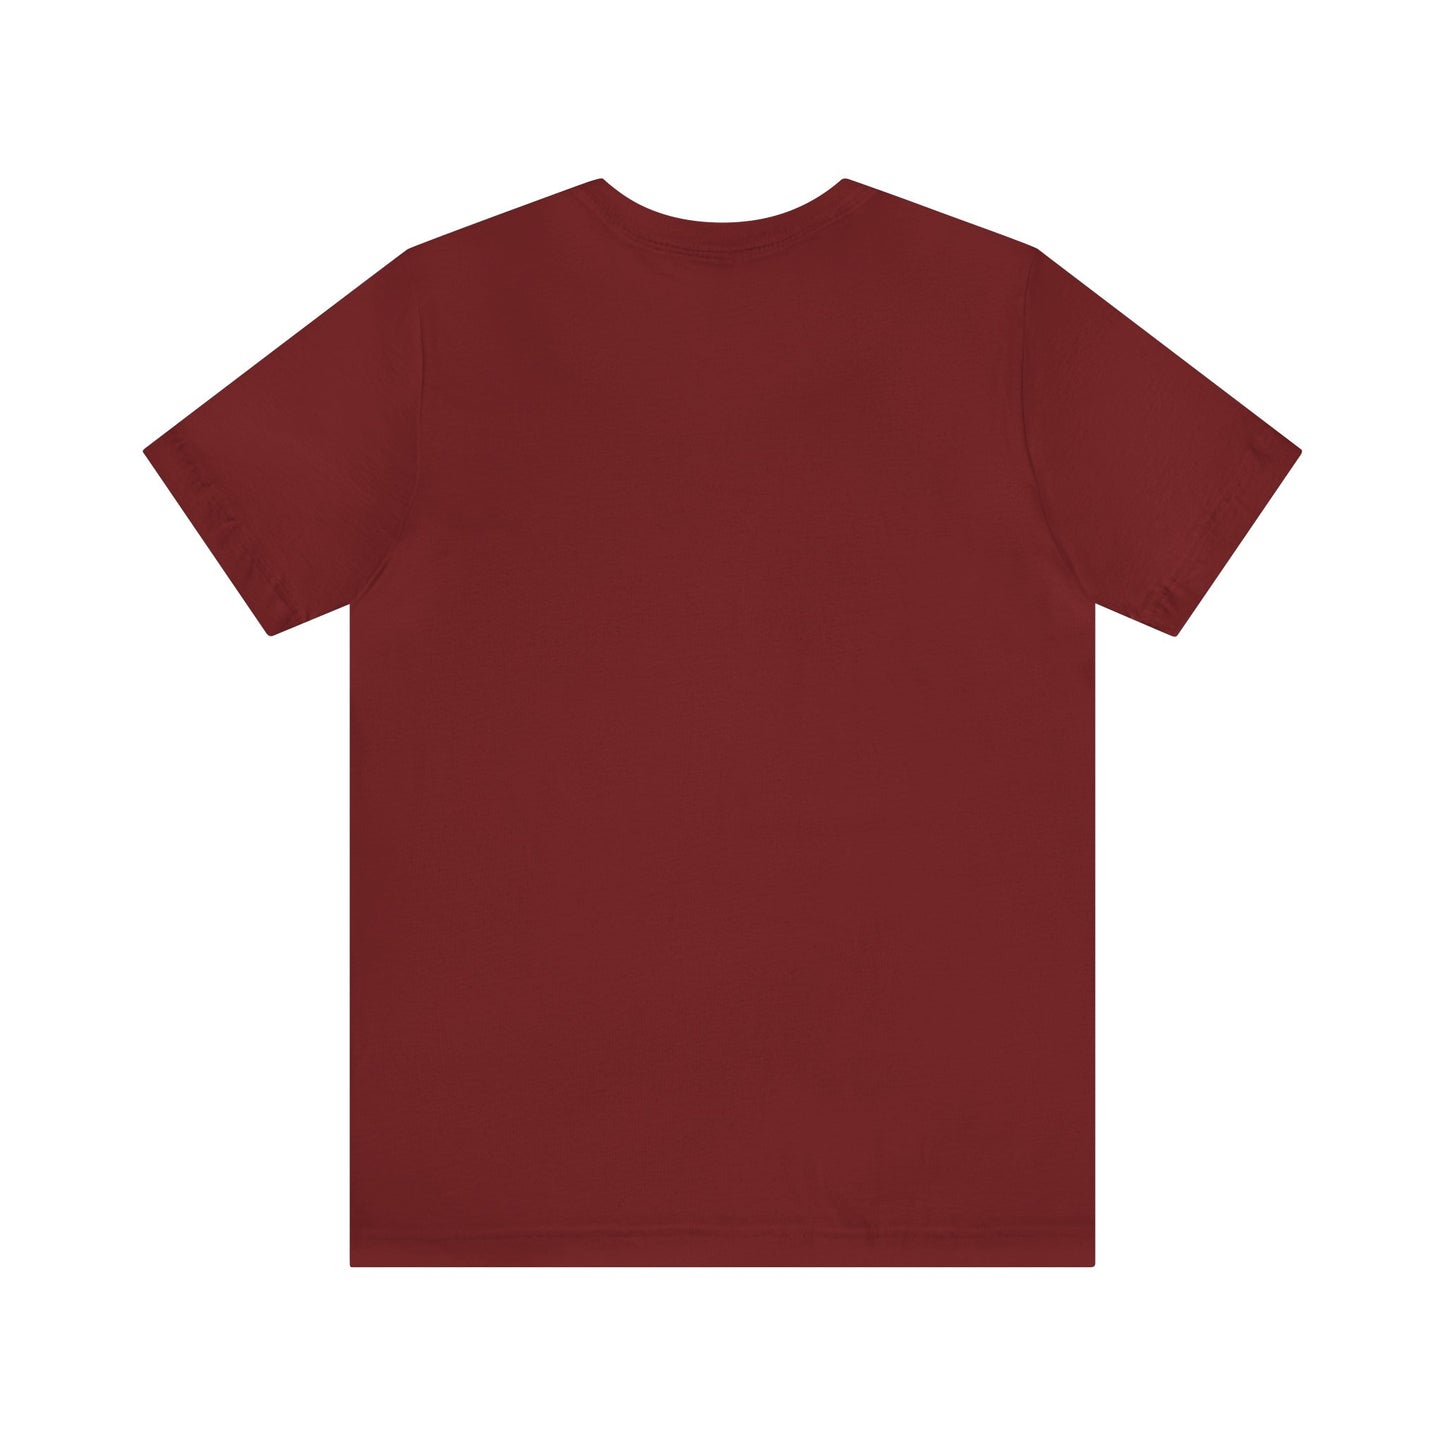 Soft T-Shirt, 100% Jersey Cotton, Unisex - Holiday Cat